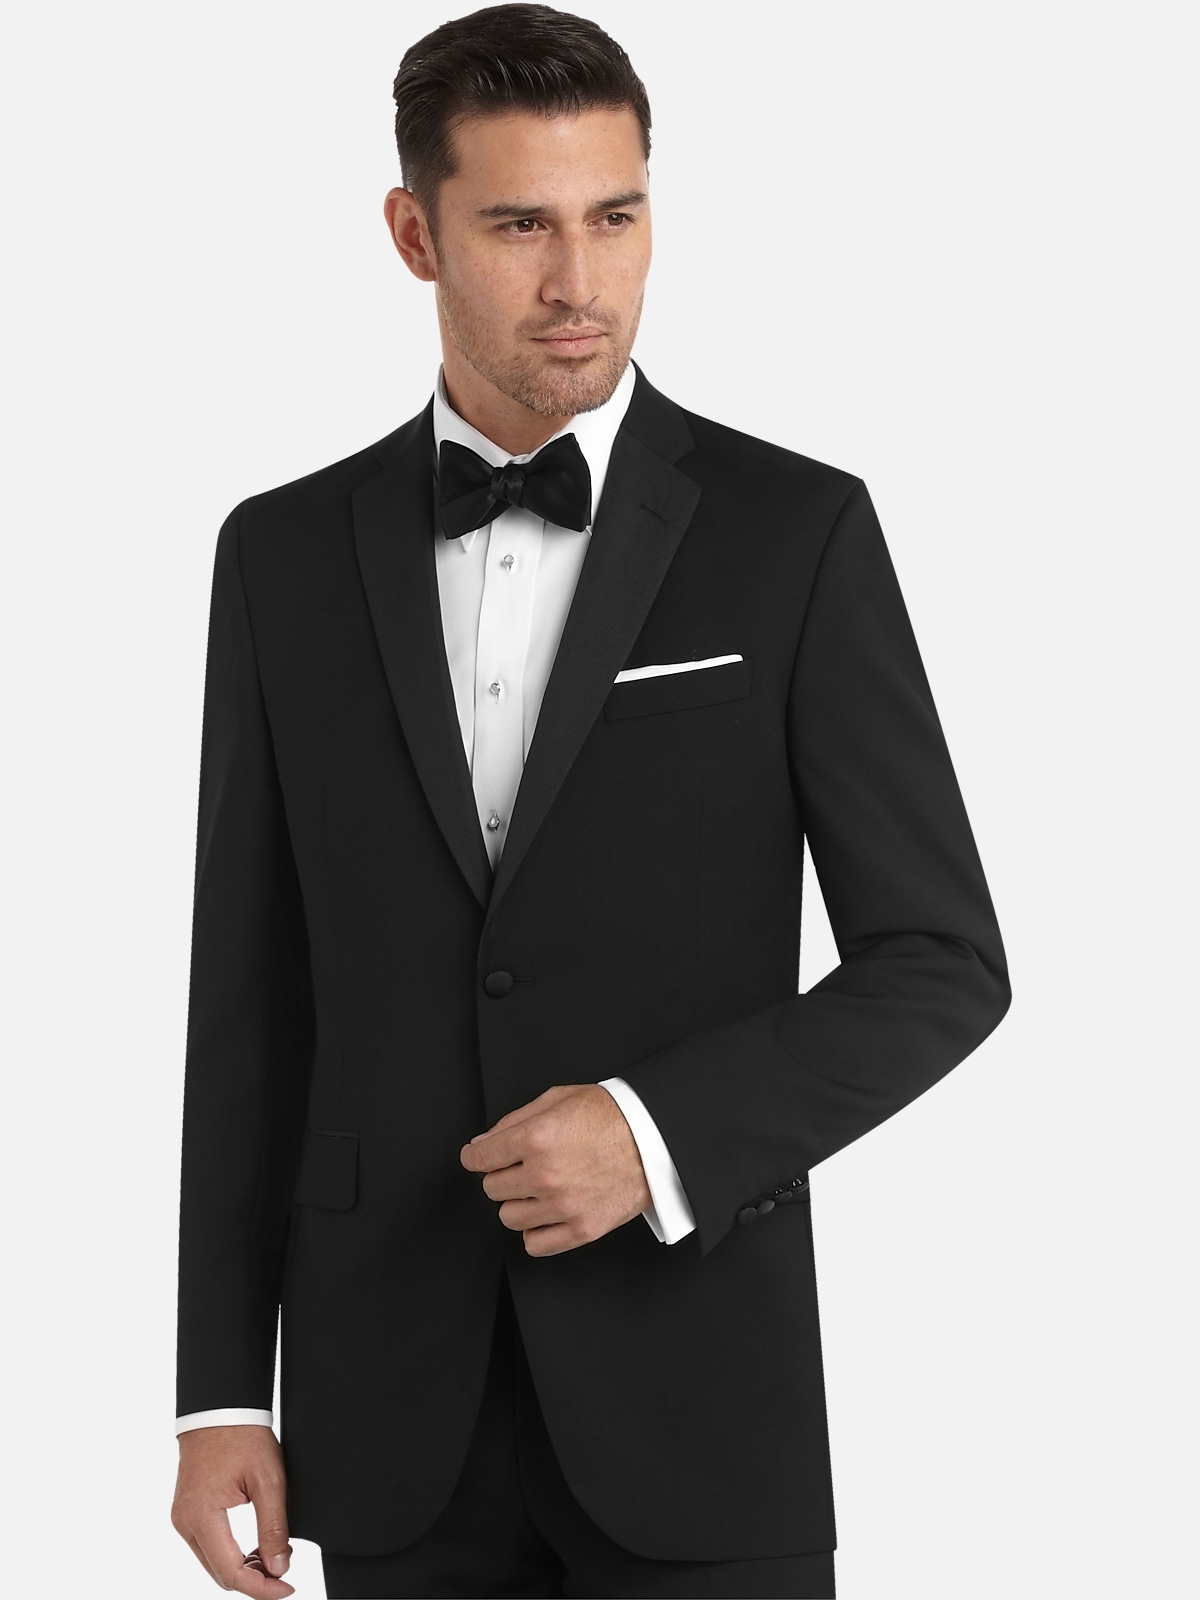 BLACK by Vera Wang Slim Fit Tuxedo Jacket | All Clothing| Men's Wearhouse